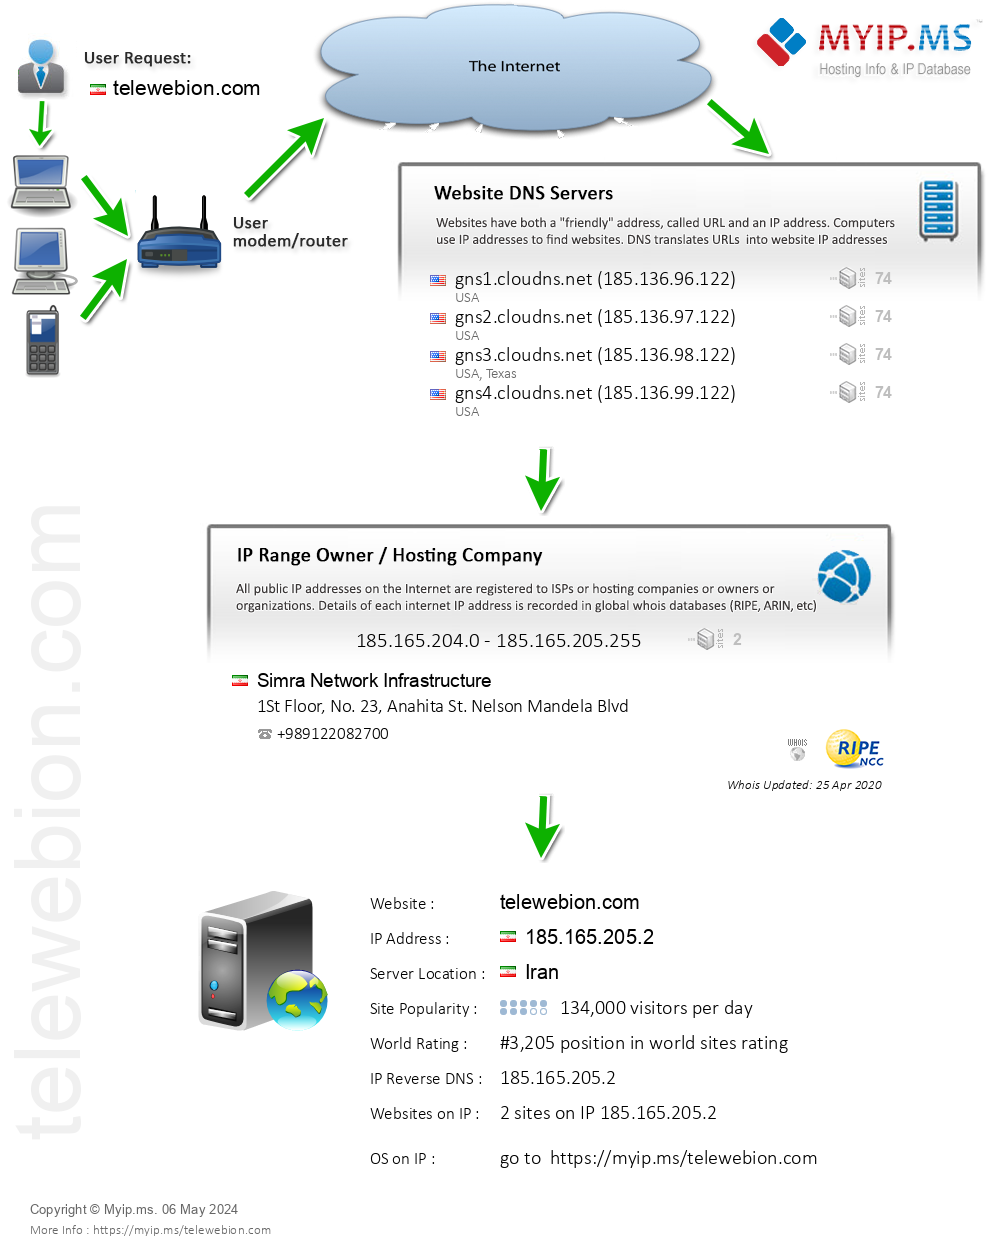 Telewebion.com - Website Hosting Visual IP Diagram